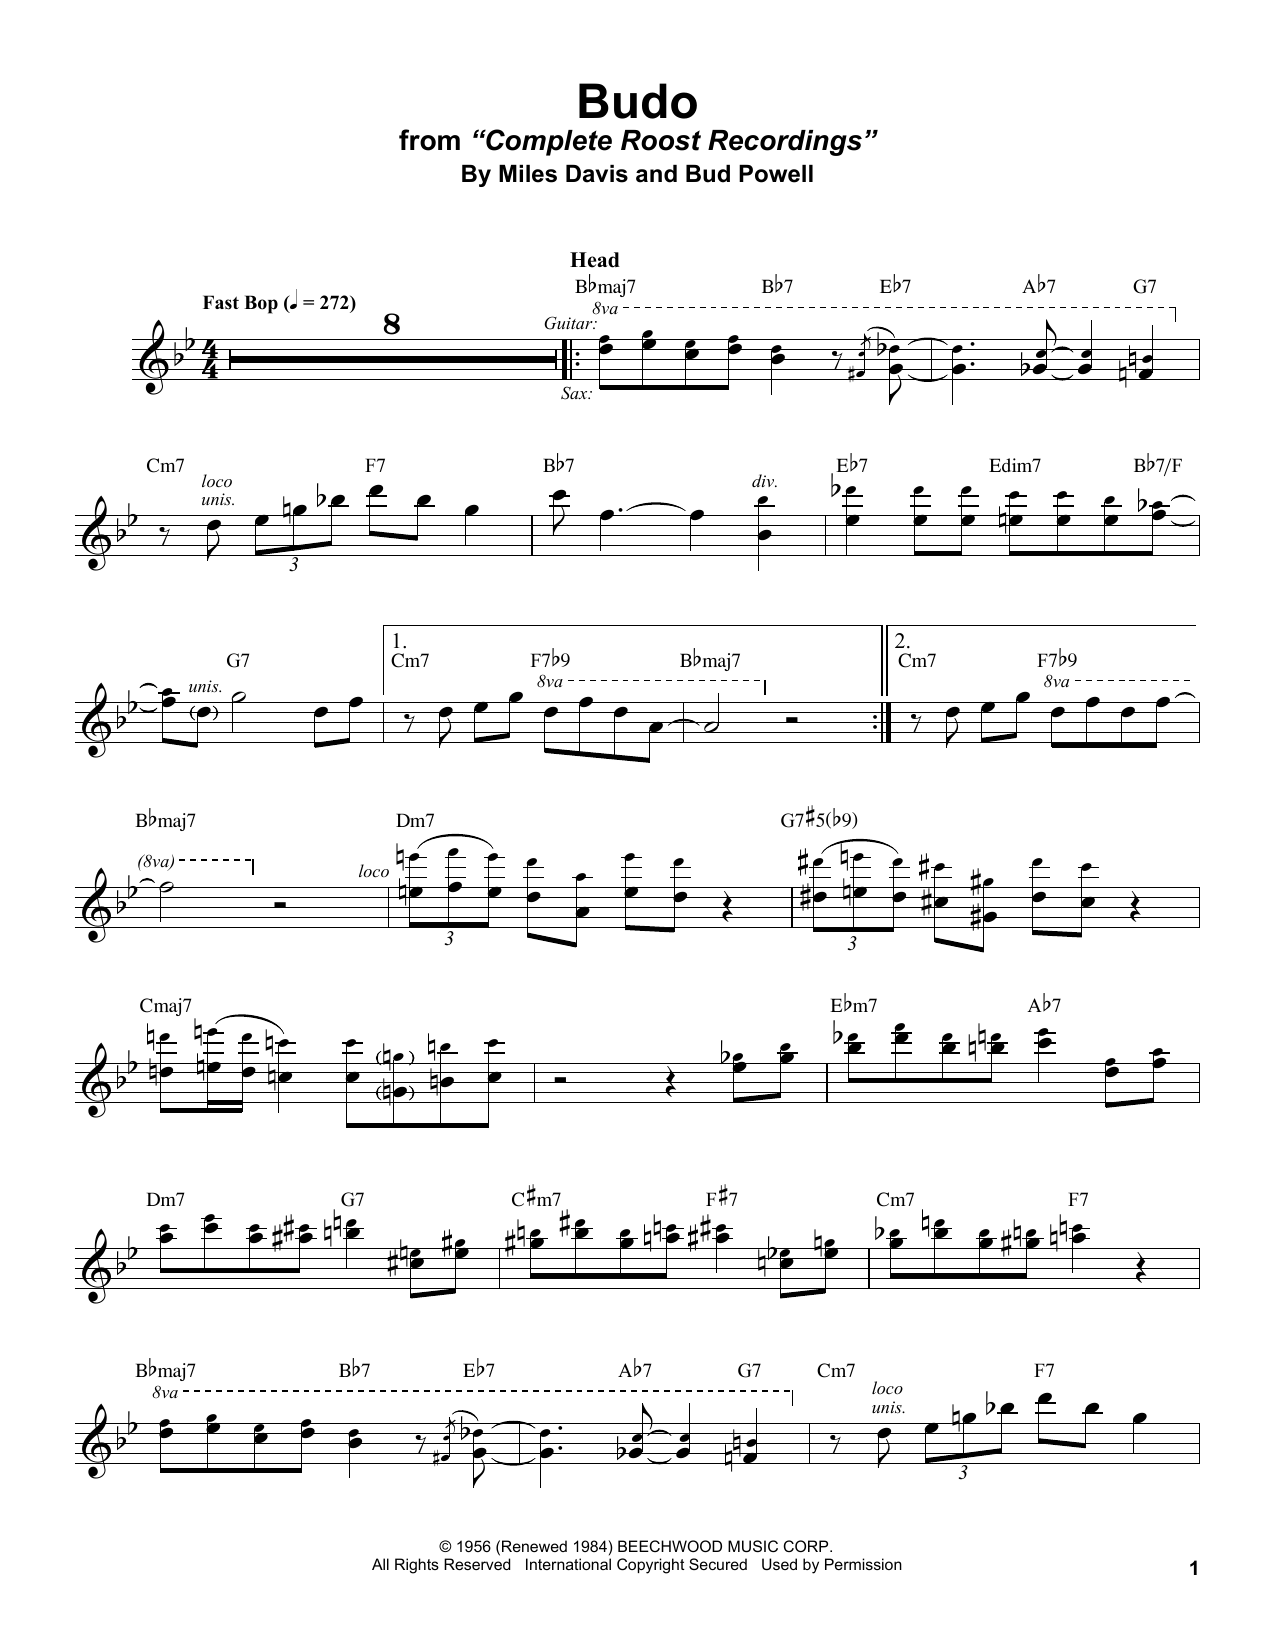 Stan Getz Budo sheet music notes and chords arranged for Alto Sax Transcription